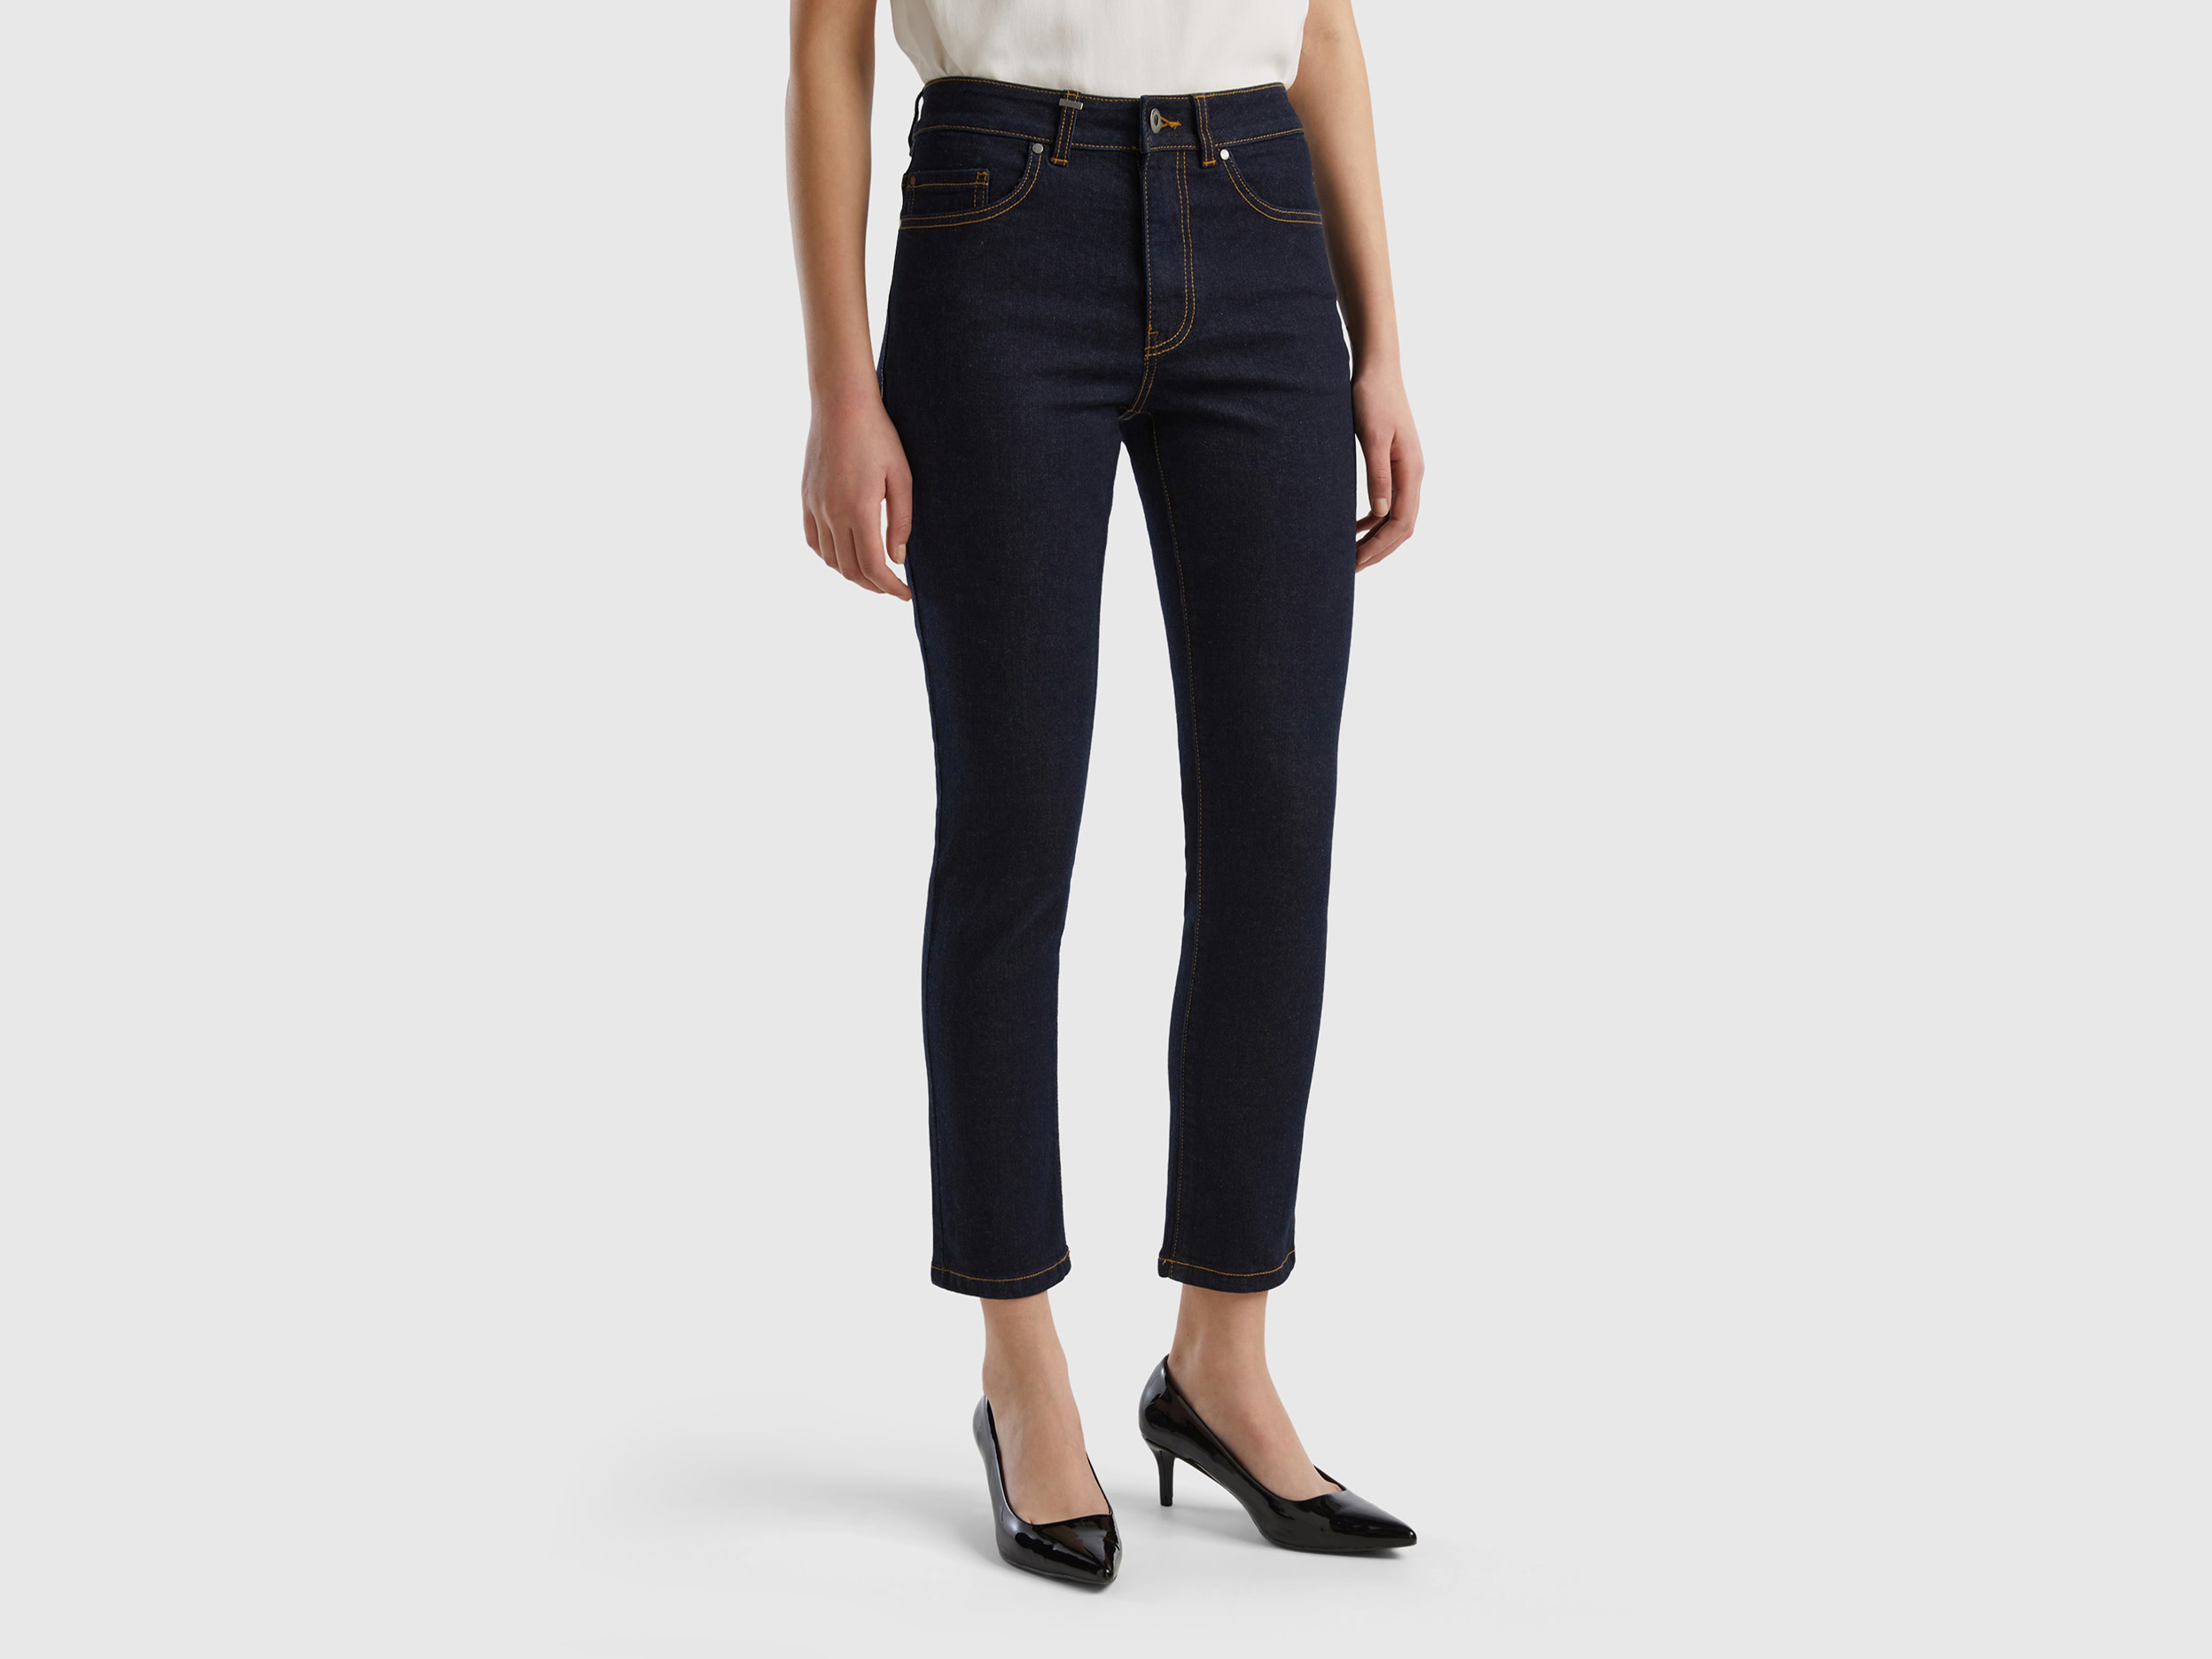 Benetton, Slim Fit High-waisted Jeans, size 31, Dark Blue, Women